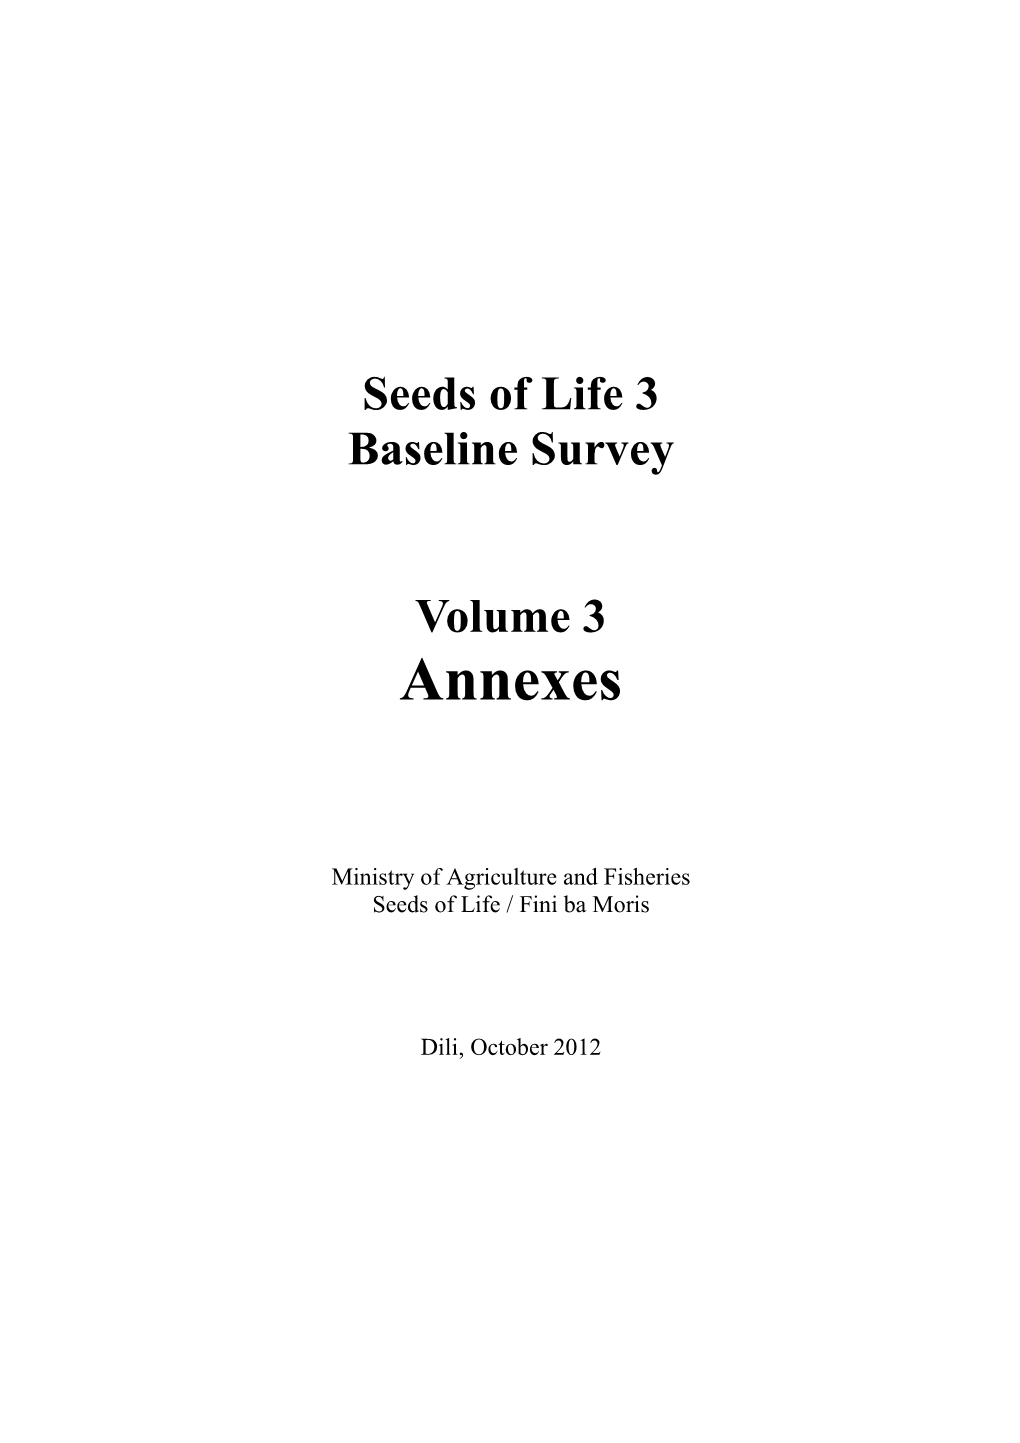 Seeds of Life 3 Baseline Survey